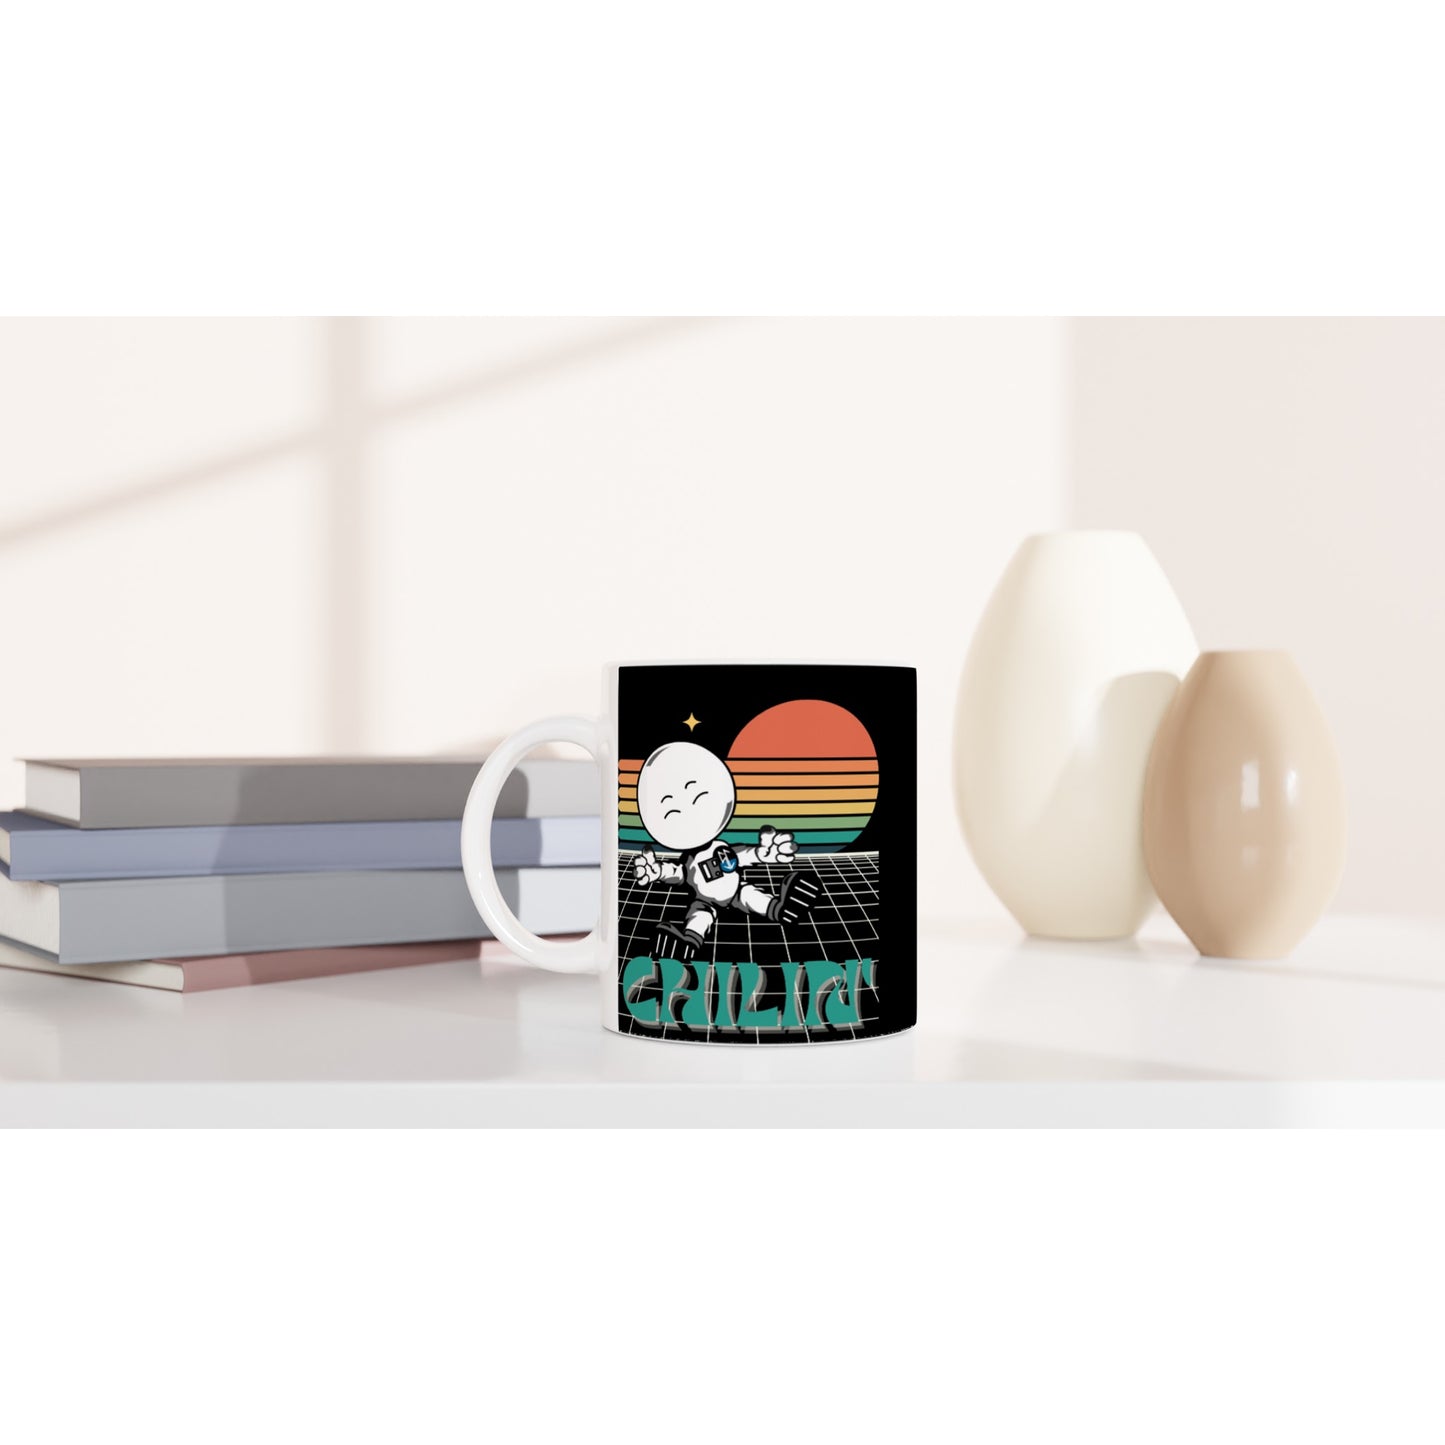 Space Cadet Chillin : Fun Black & White 11oz Ceramic Mug